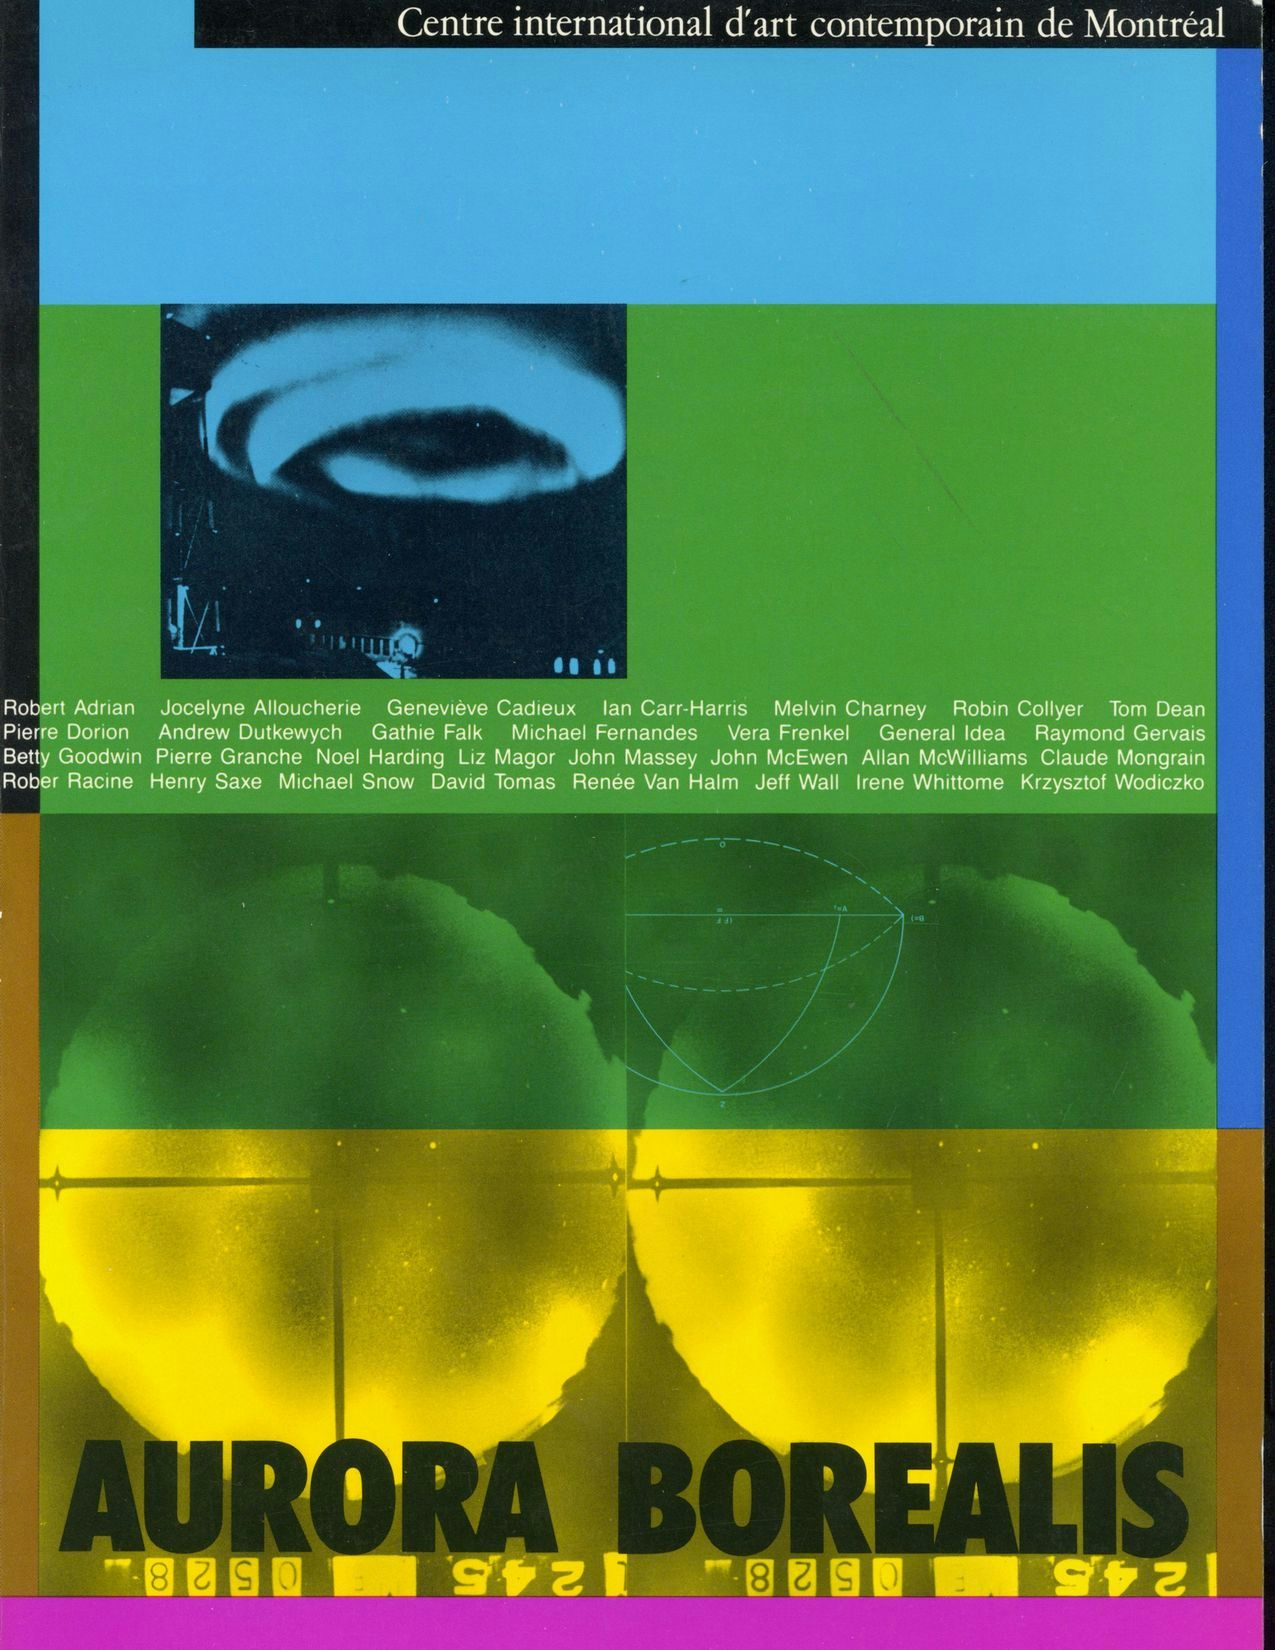 Cover of the Aurora Borealis catalogue, designed by Angela Grauerholz, 1985.